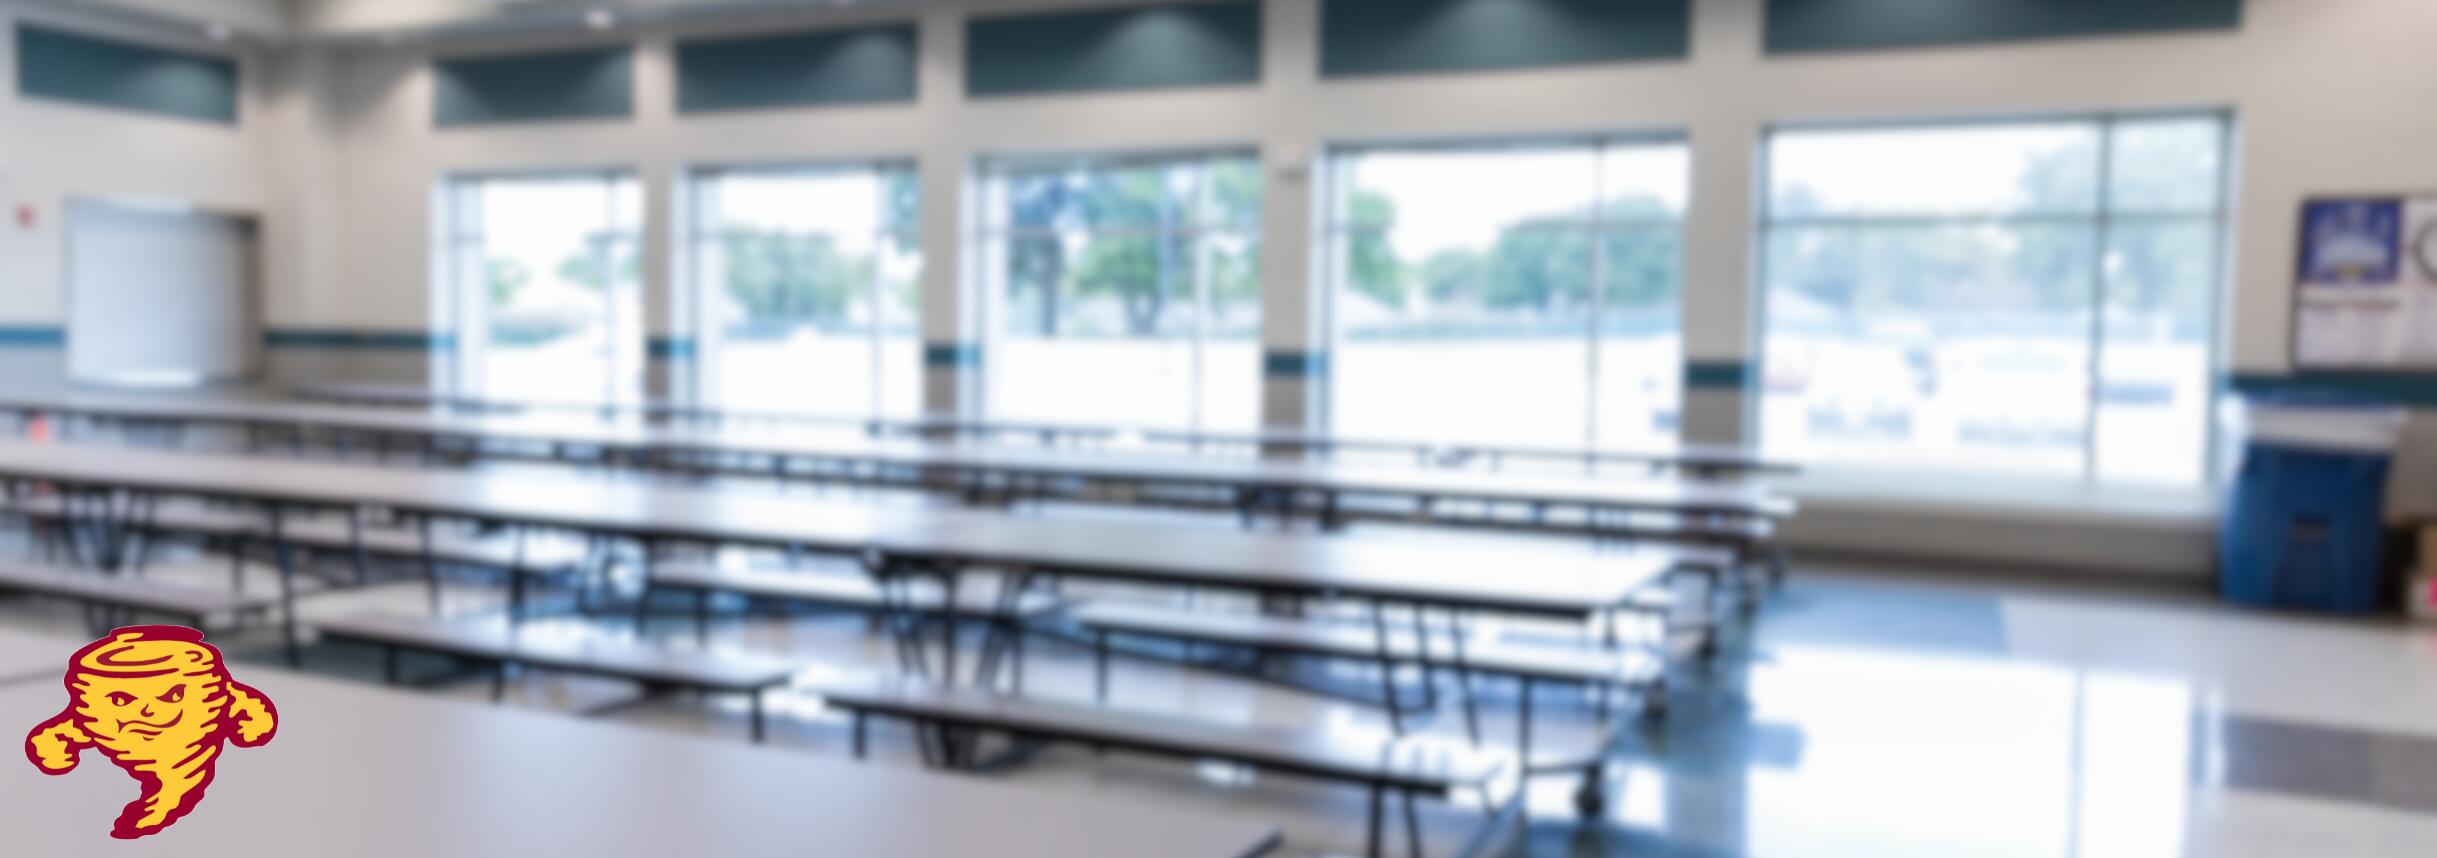 Blurred School Cafeteria